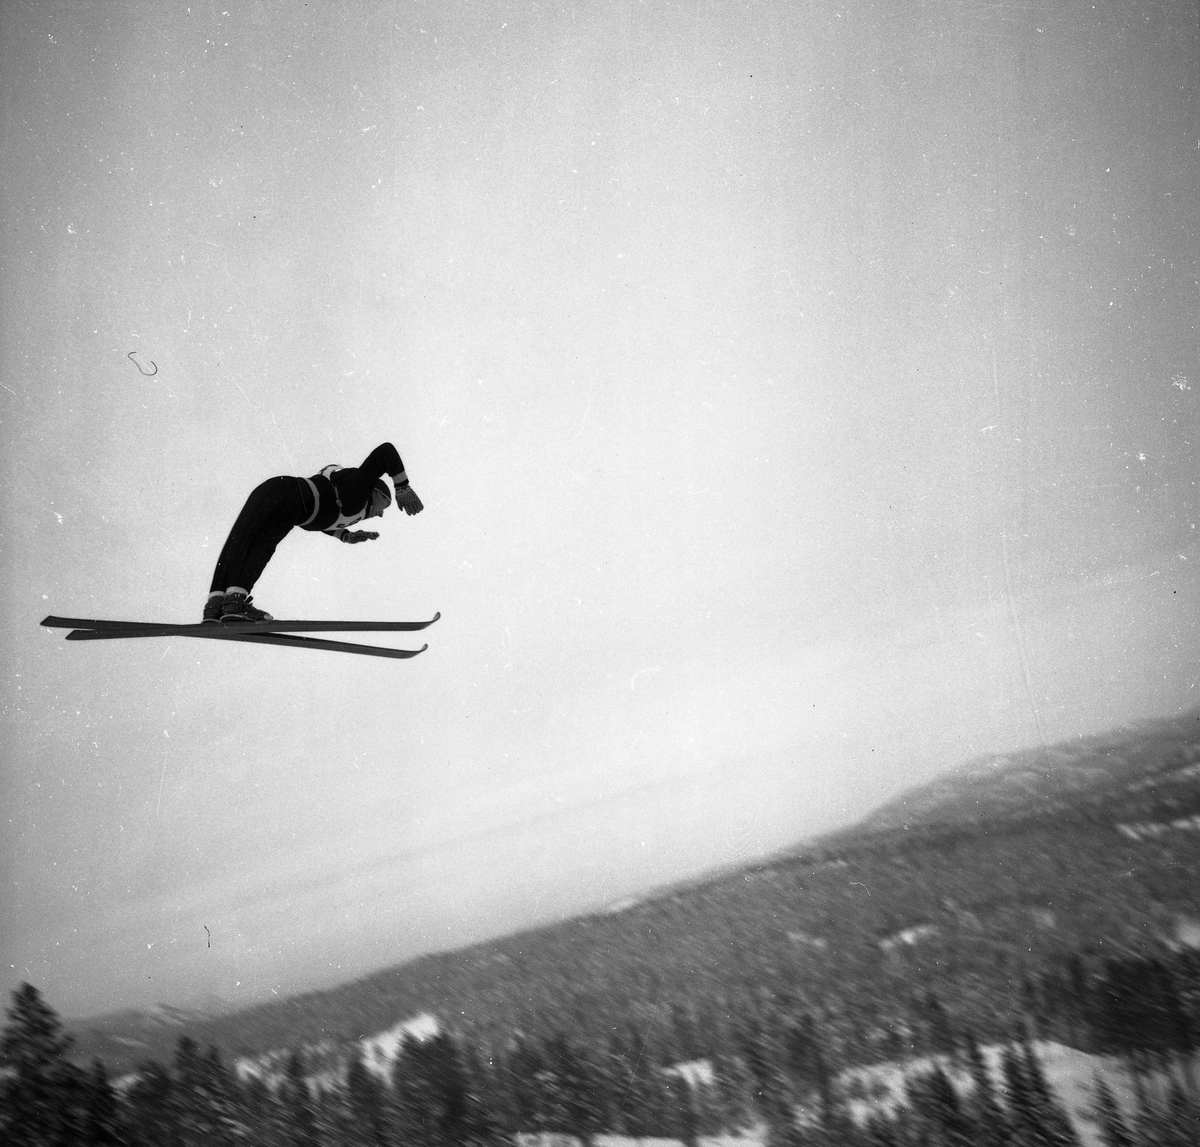 Ski jumper from Kongsberg in action